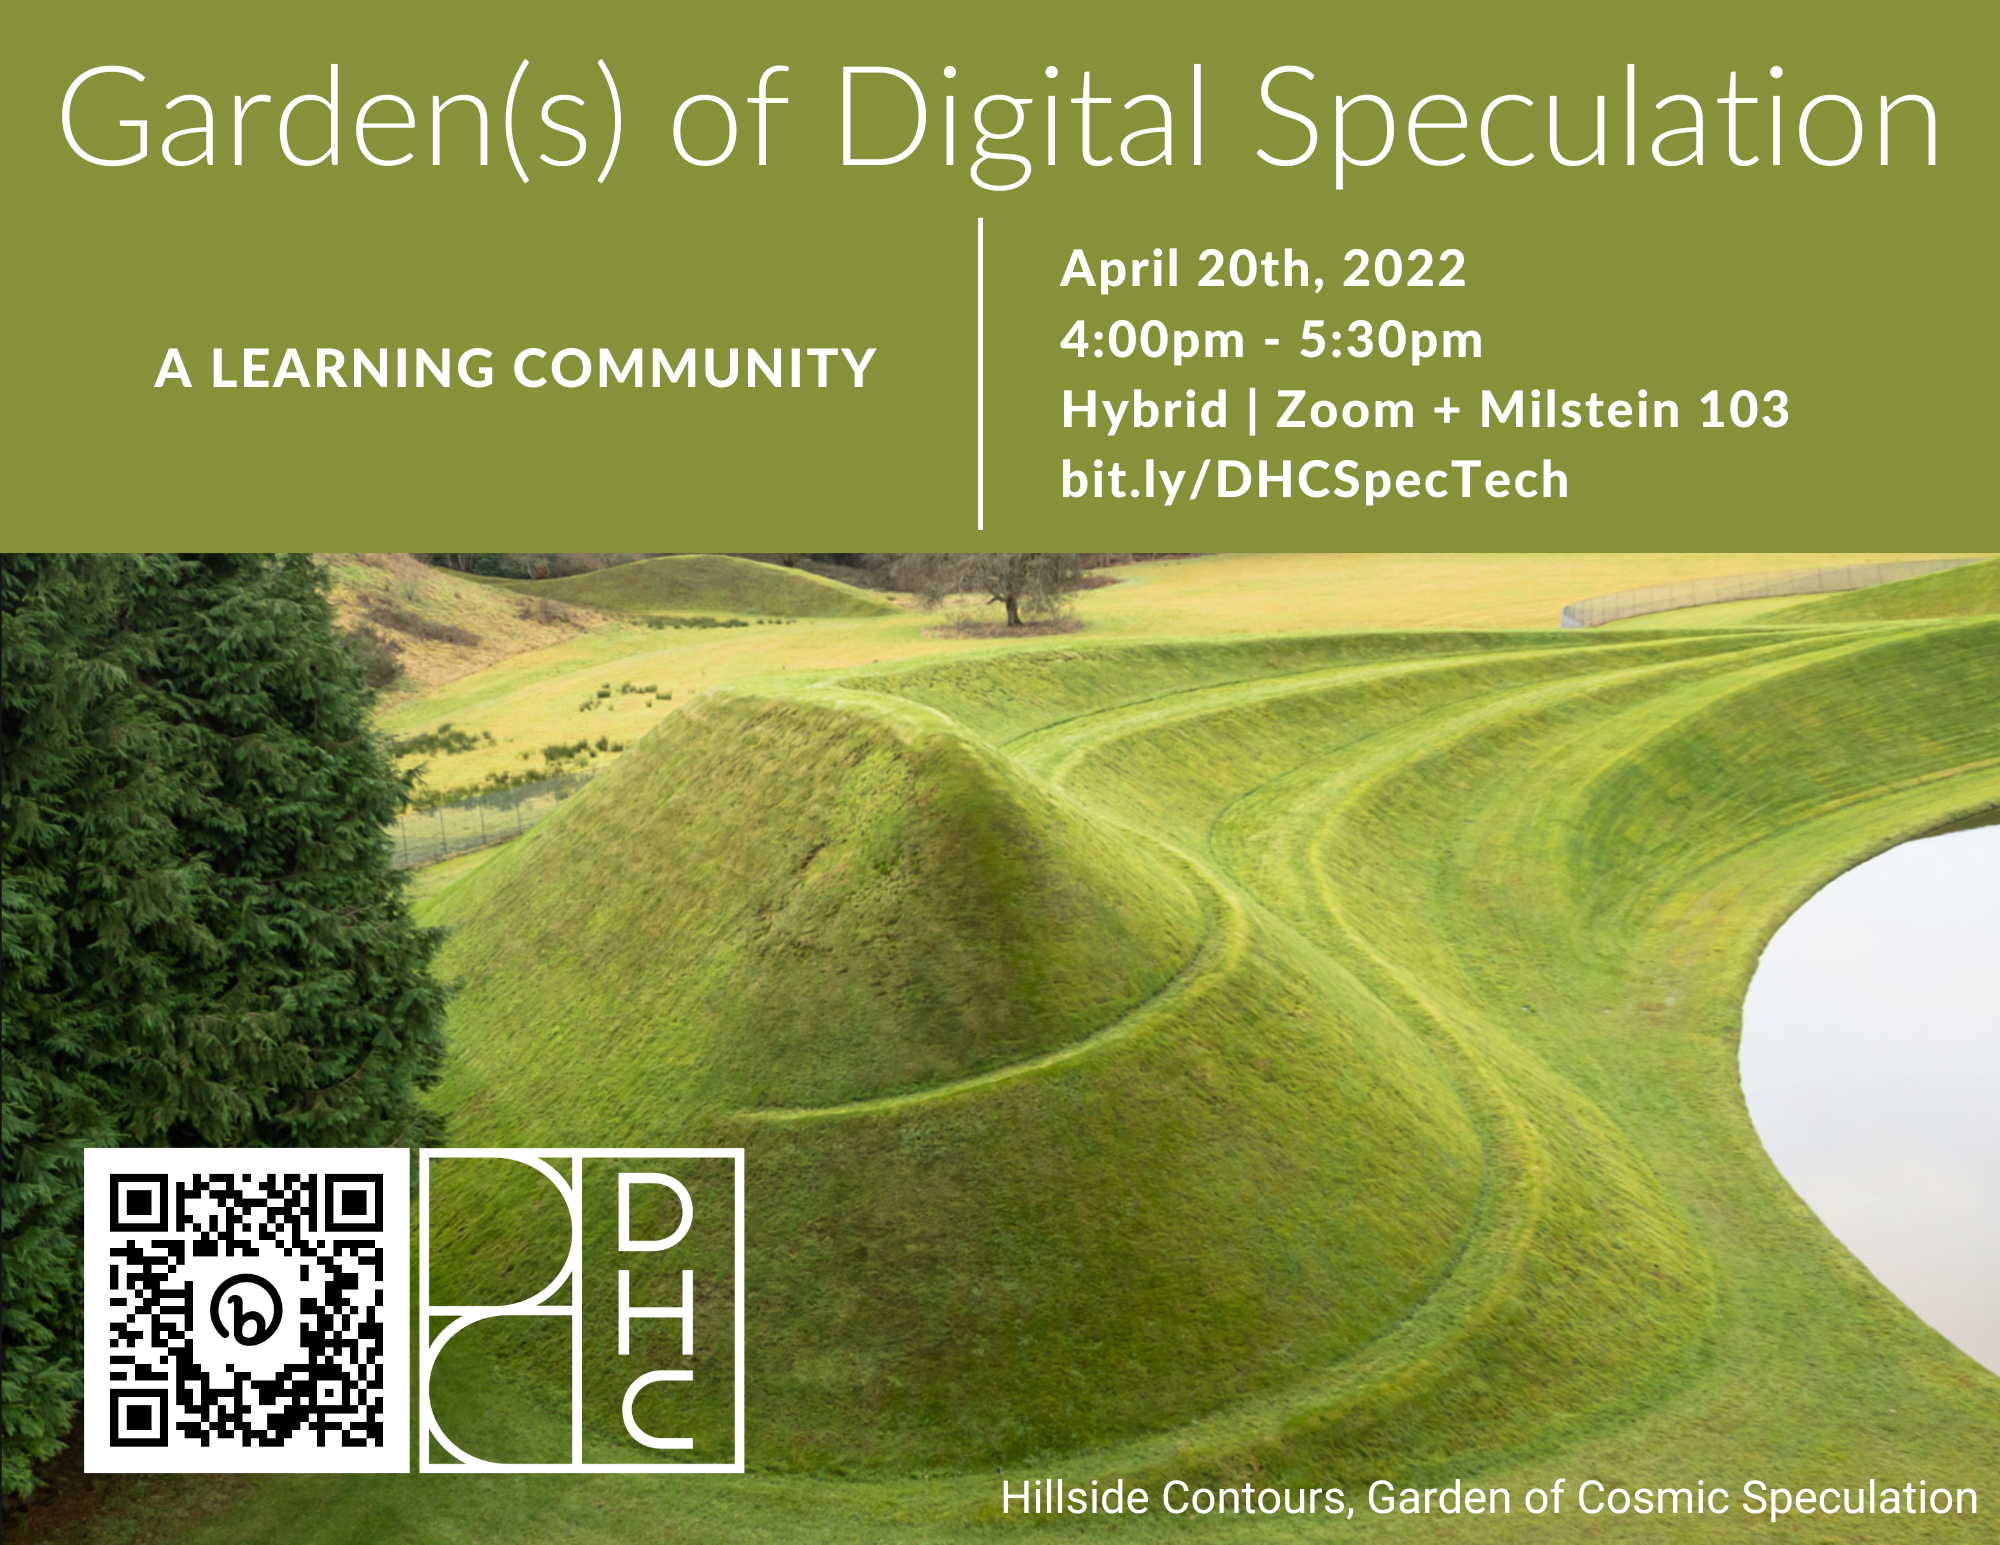 Garden(s) of Digital Speculation Flyer Updated Date 